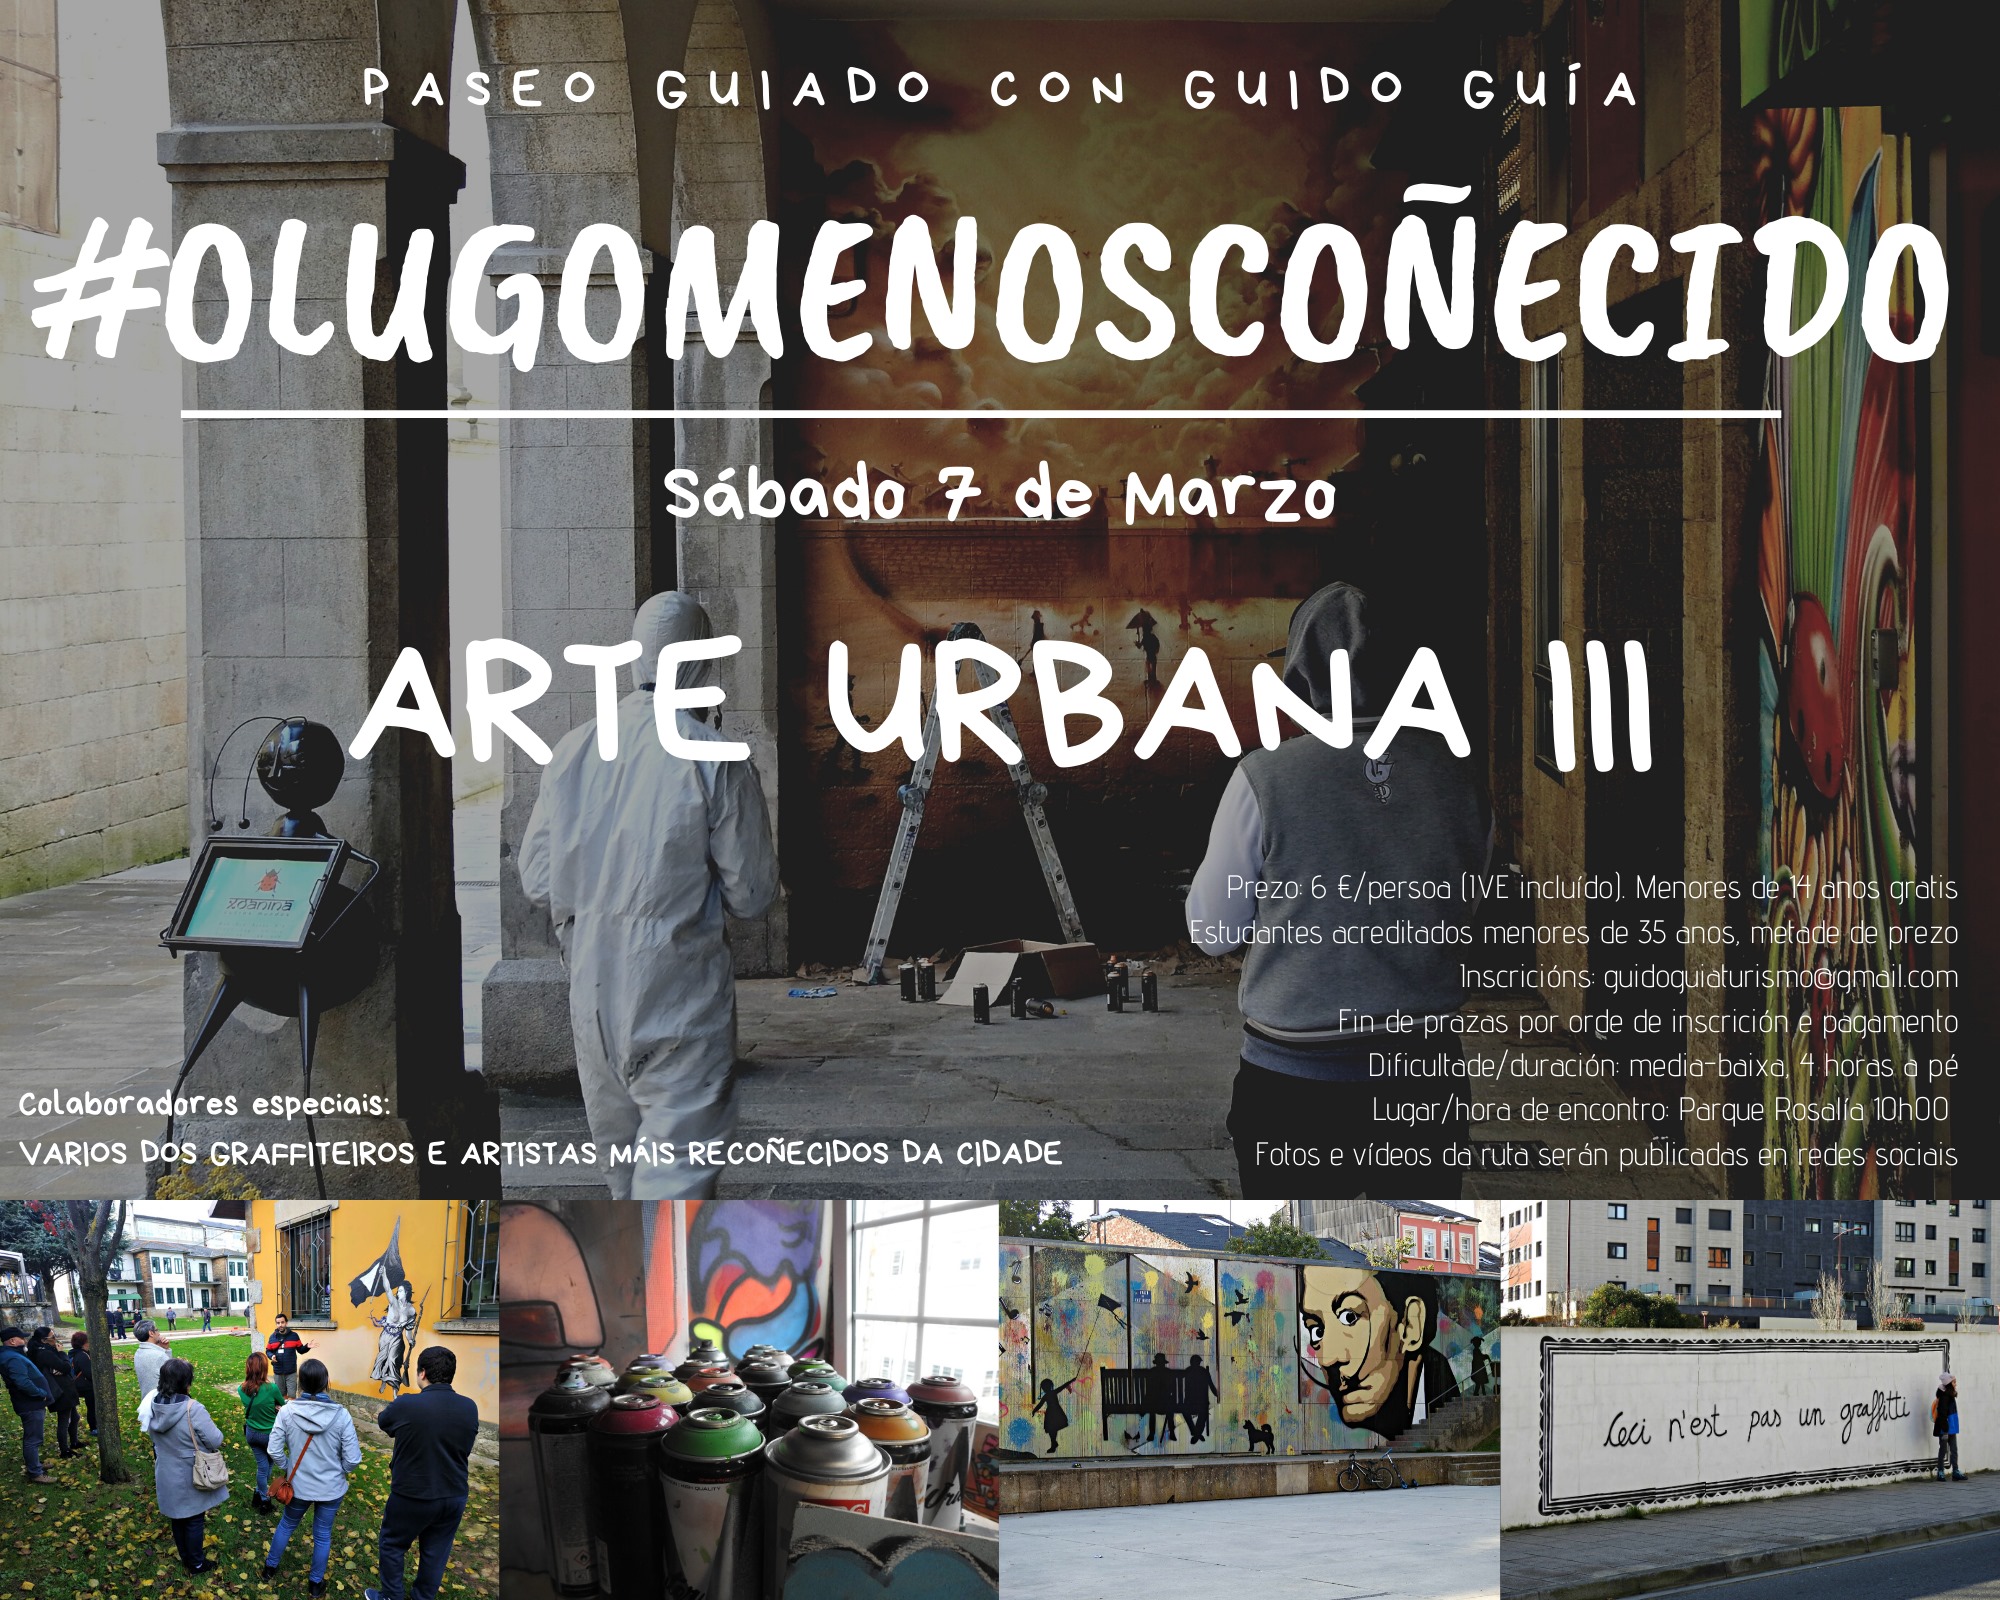 Paseo guiado pola arte urbana de Lugo